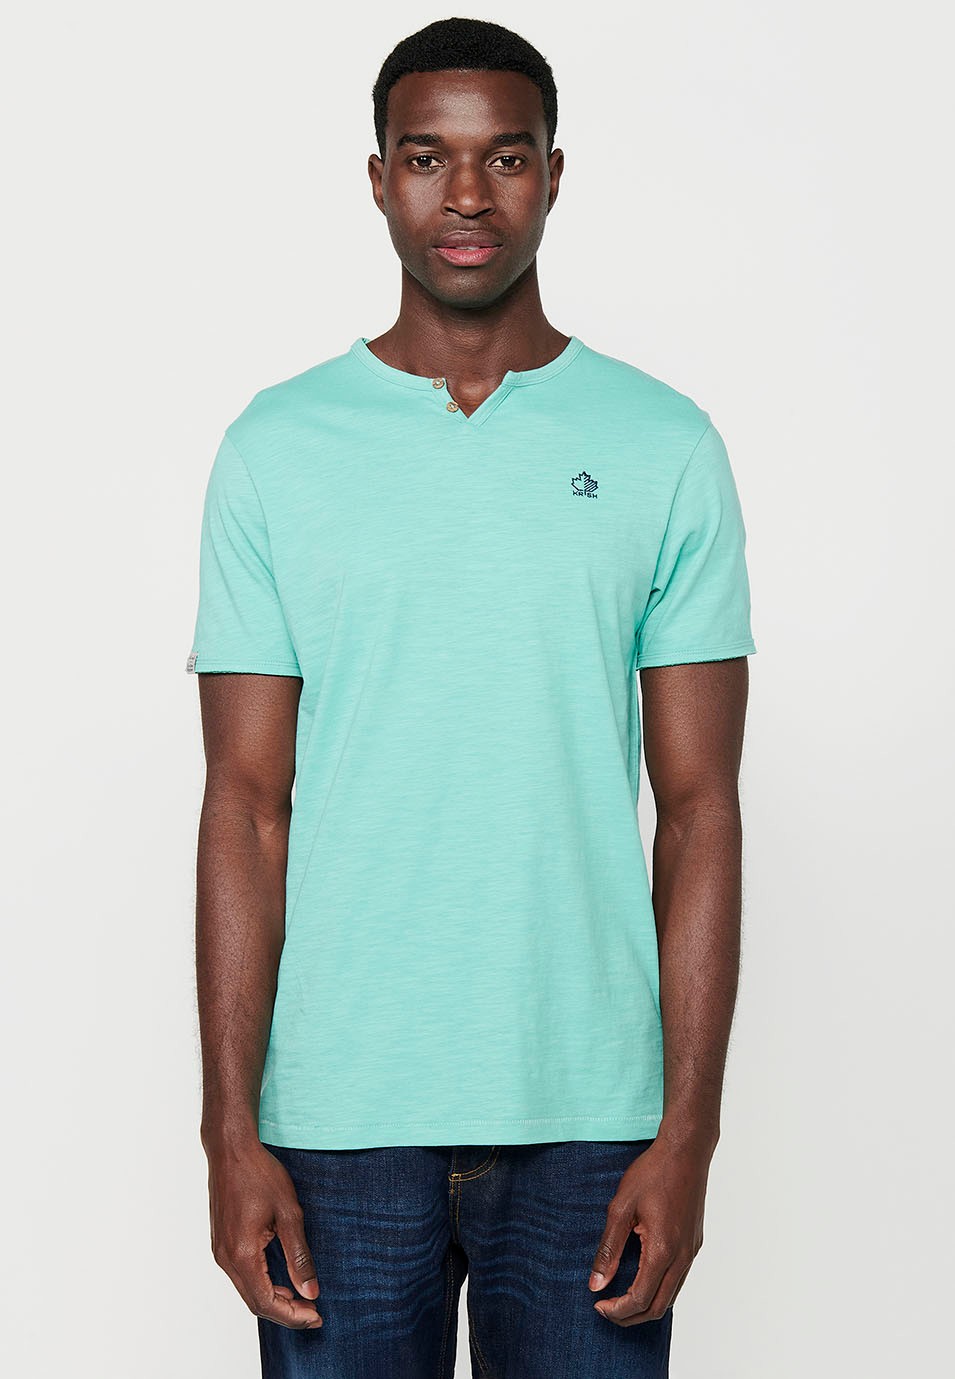 Basic short-sleeved cotton t-shirt, V-neck with button, mint color for men 1